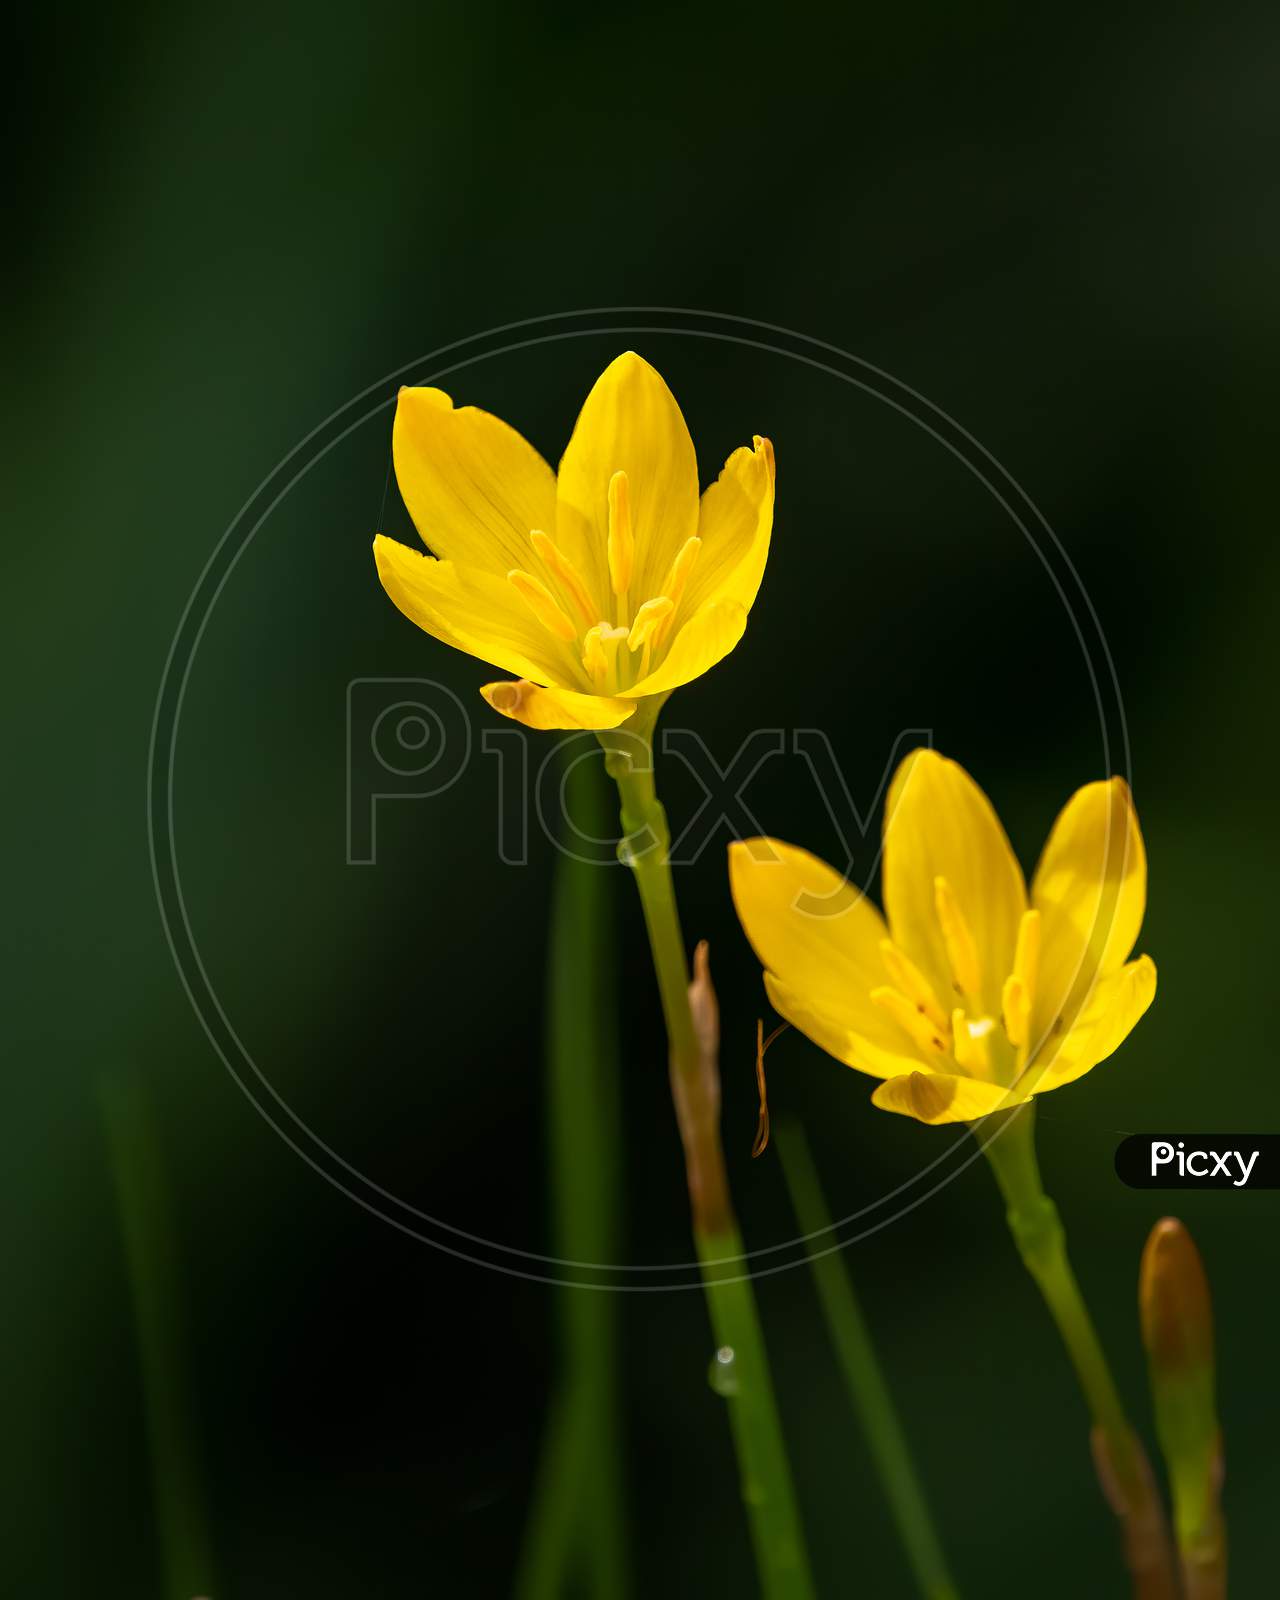 Yellow Rain Lily Flowers Glowing In Sunlight